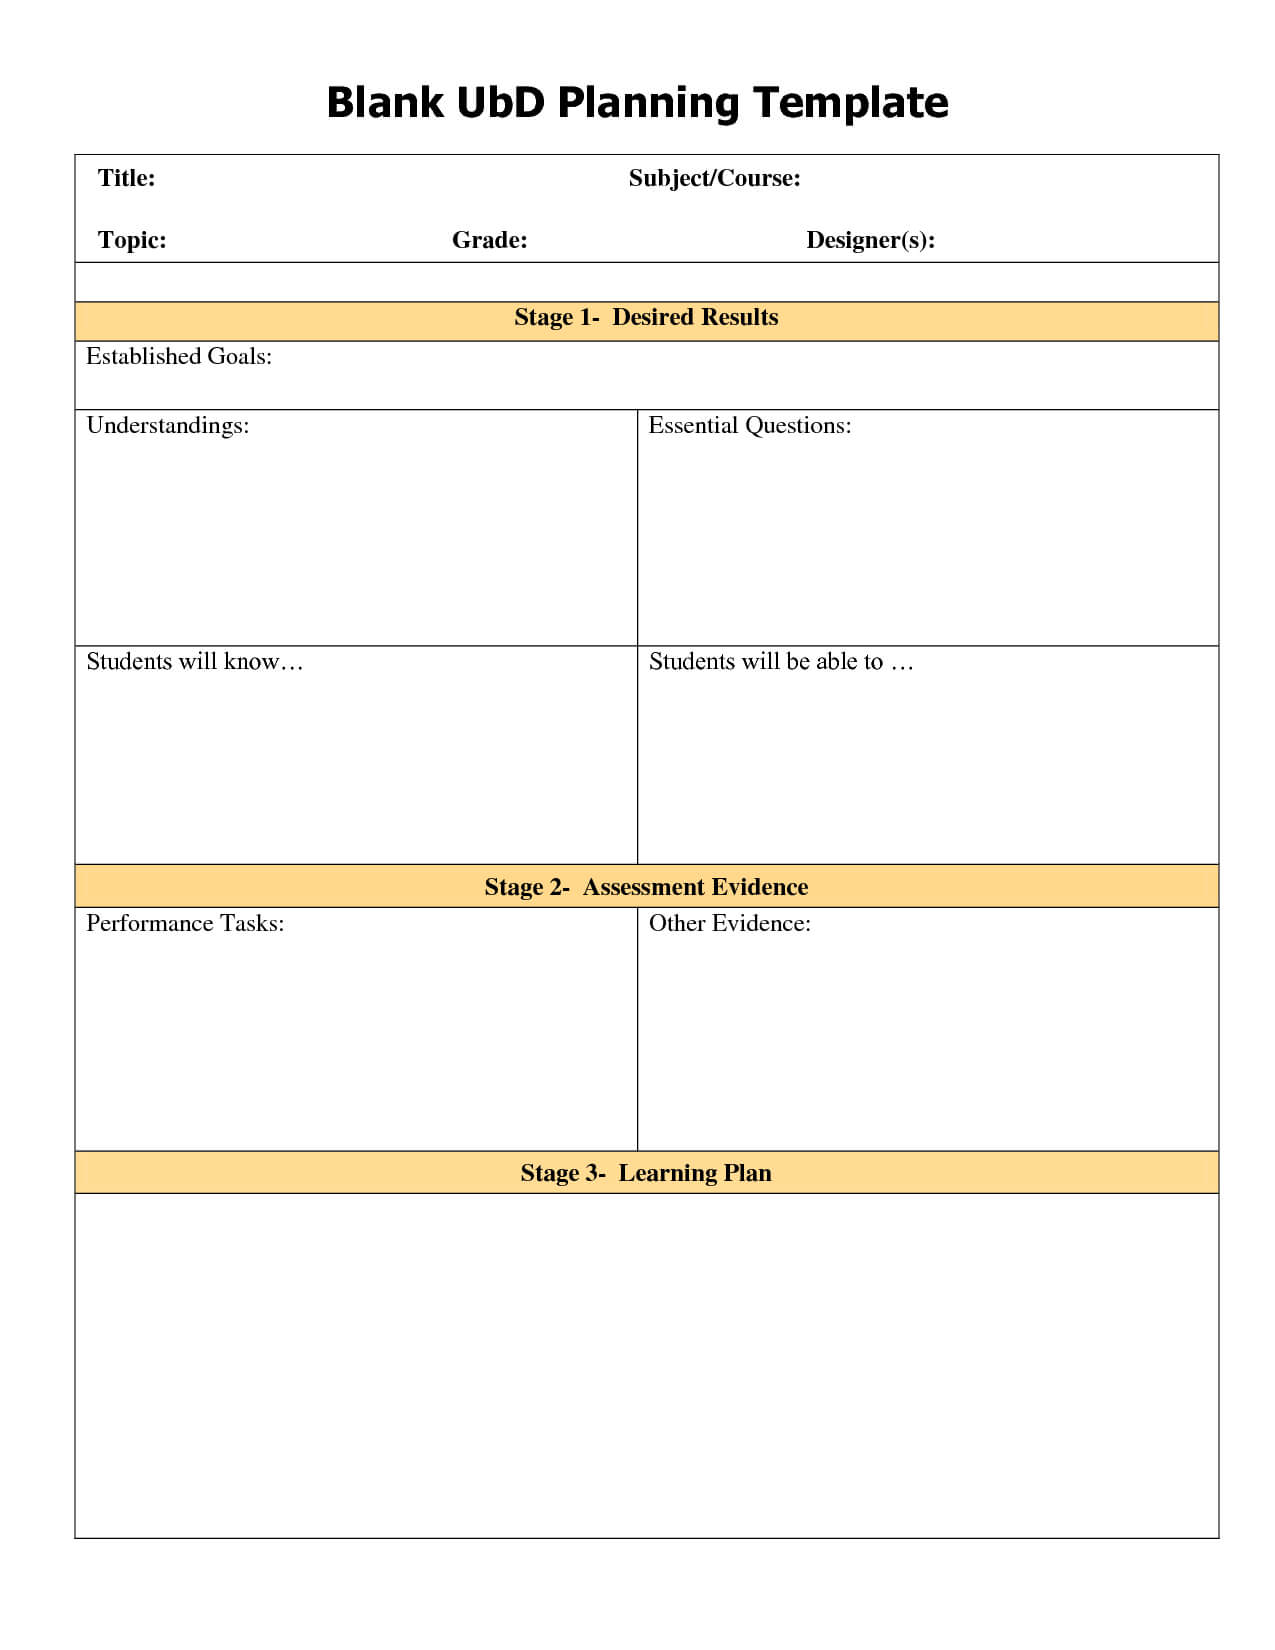 Blank Ubd Template | Blank Ubd Planning Template Regarding Blank Unit Lesson Plan Template